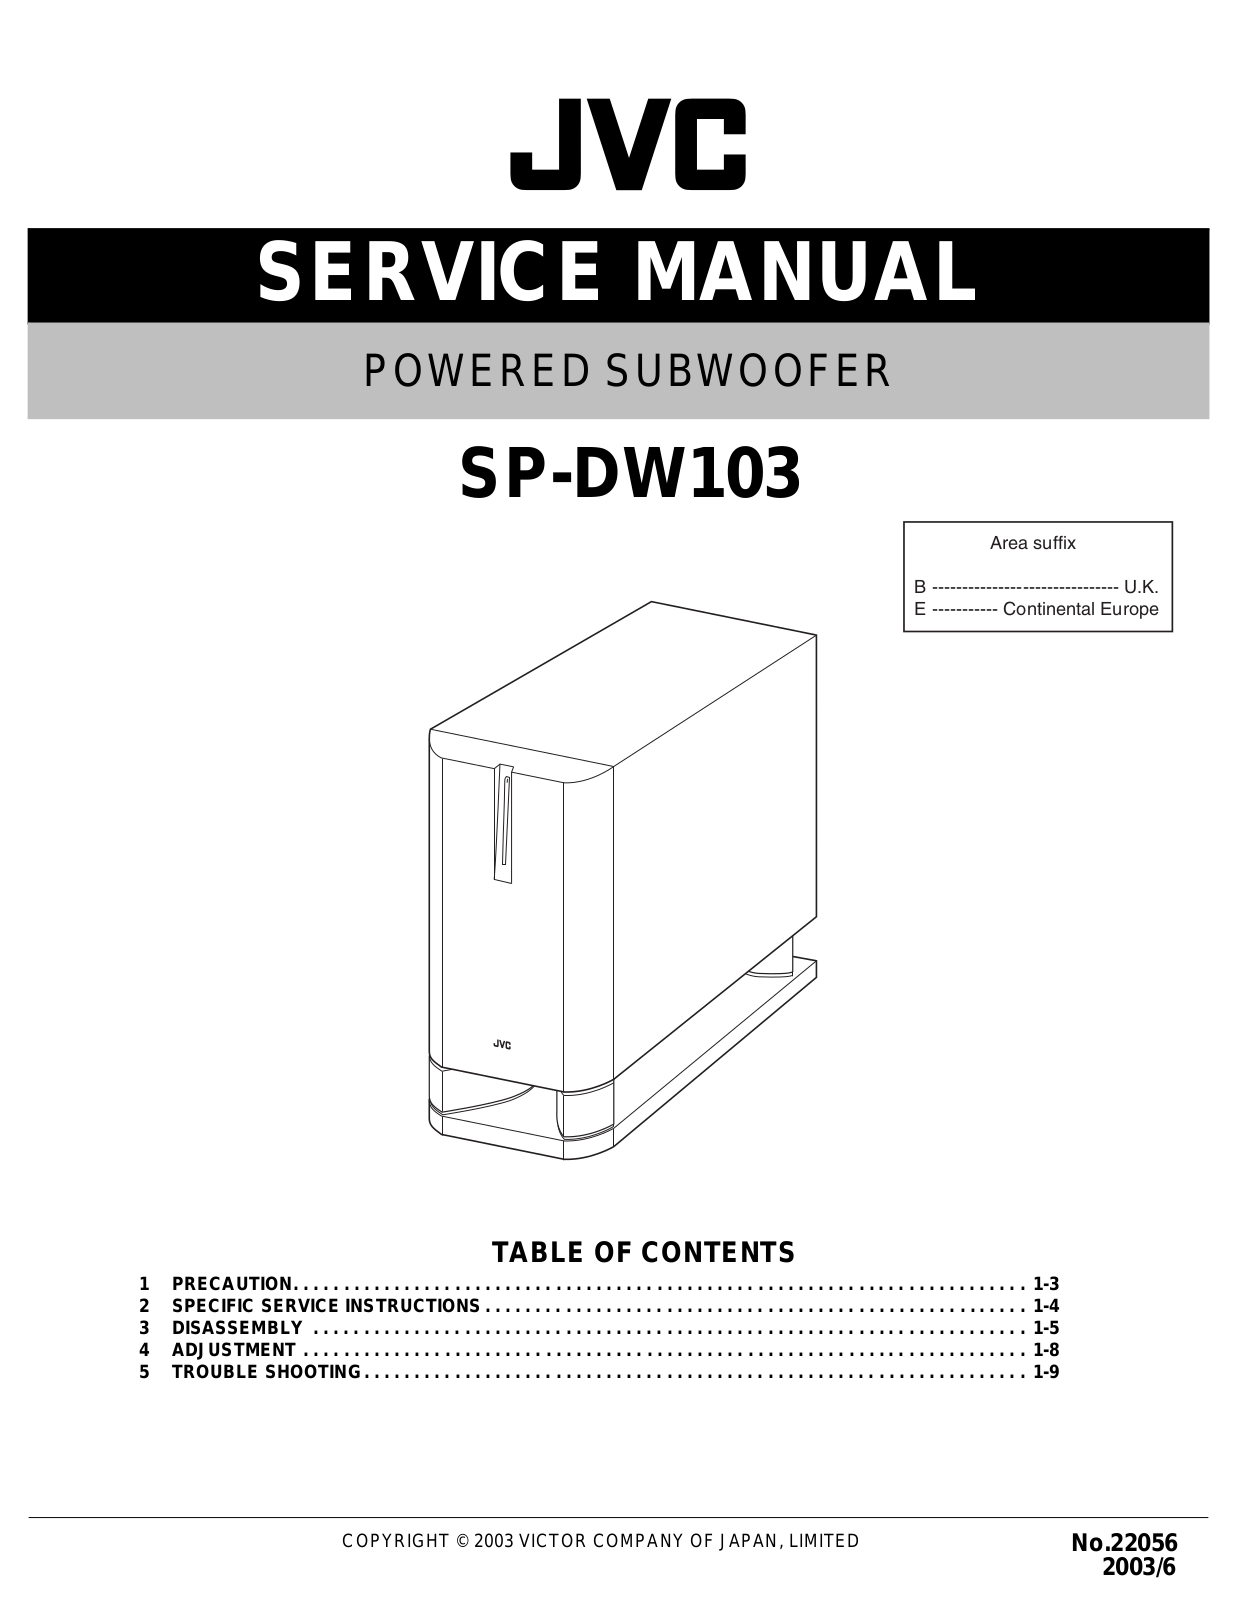 Jvc SP-DW103 Service Manual